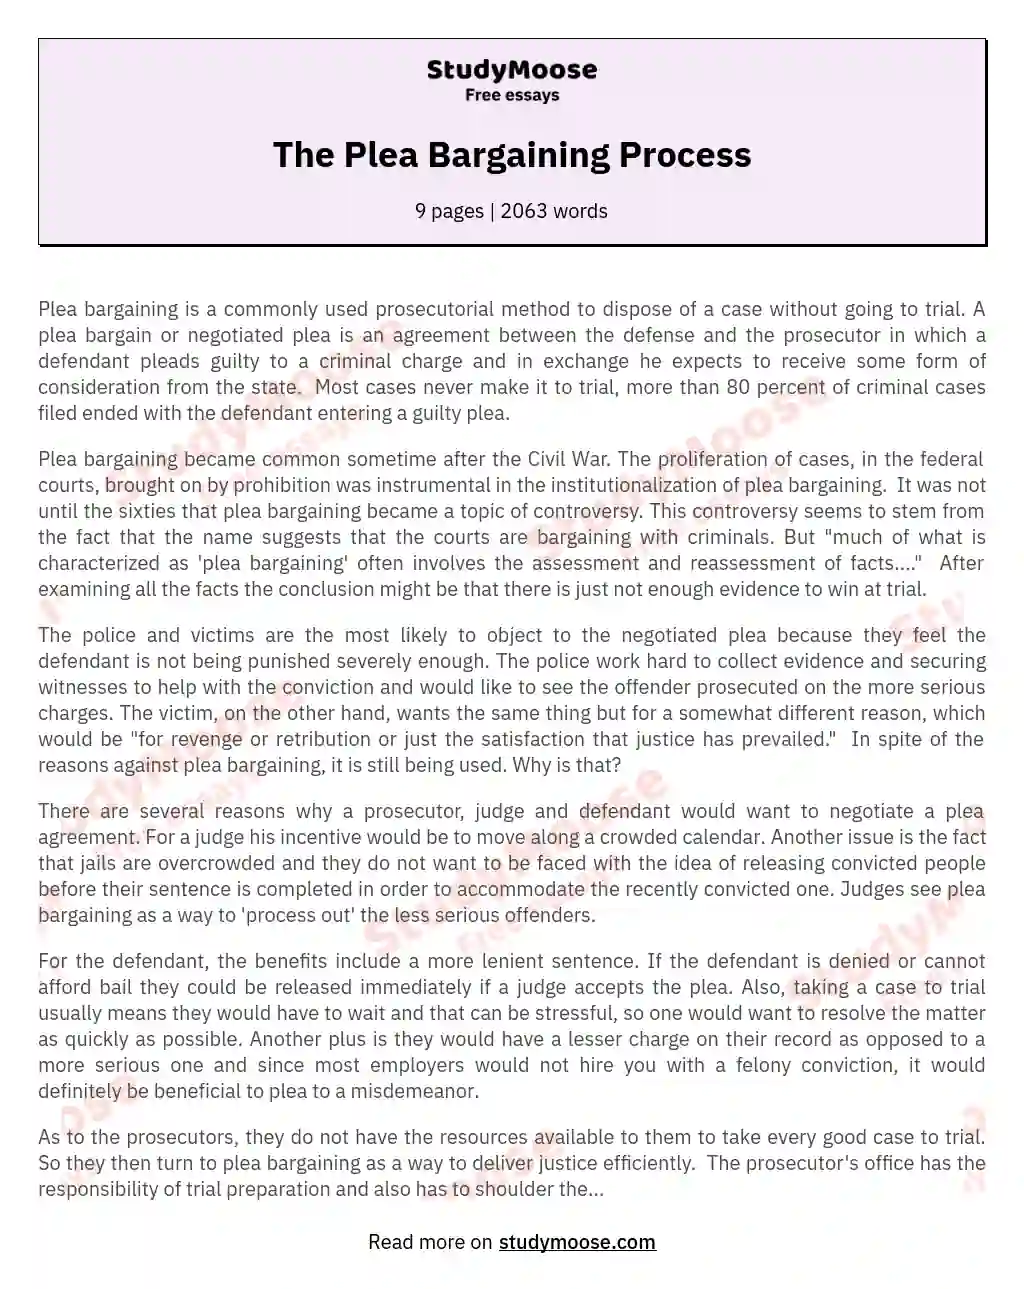 The Plea Bargaining Process essay